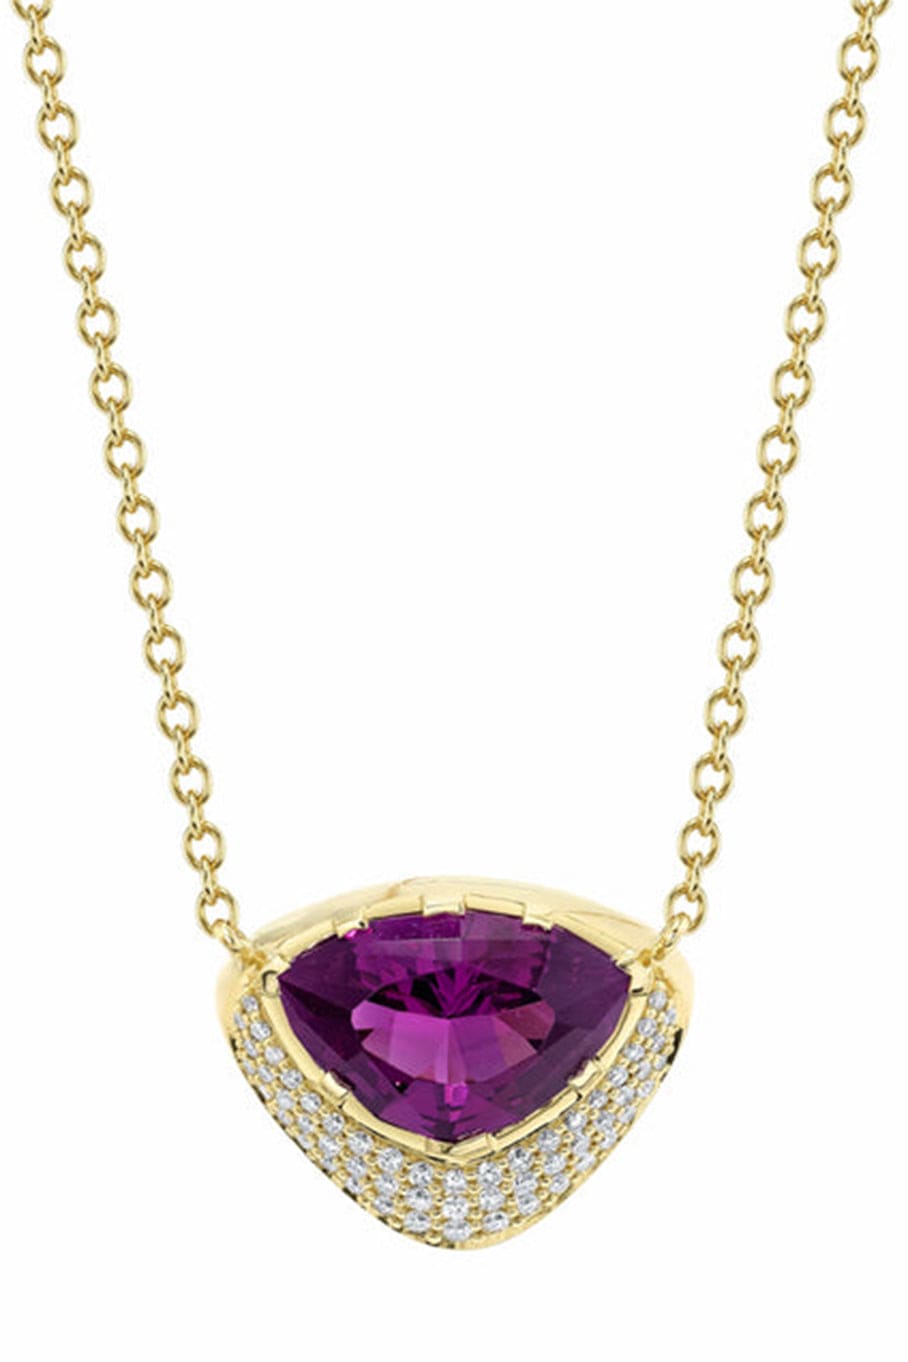 ANDY LIF-Purple Garnet and Diamond Necklace-YLWOLD